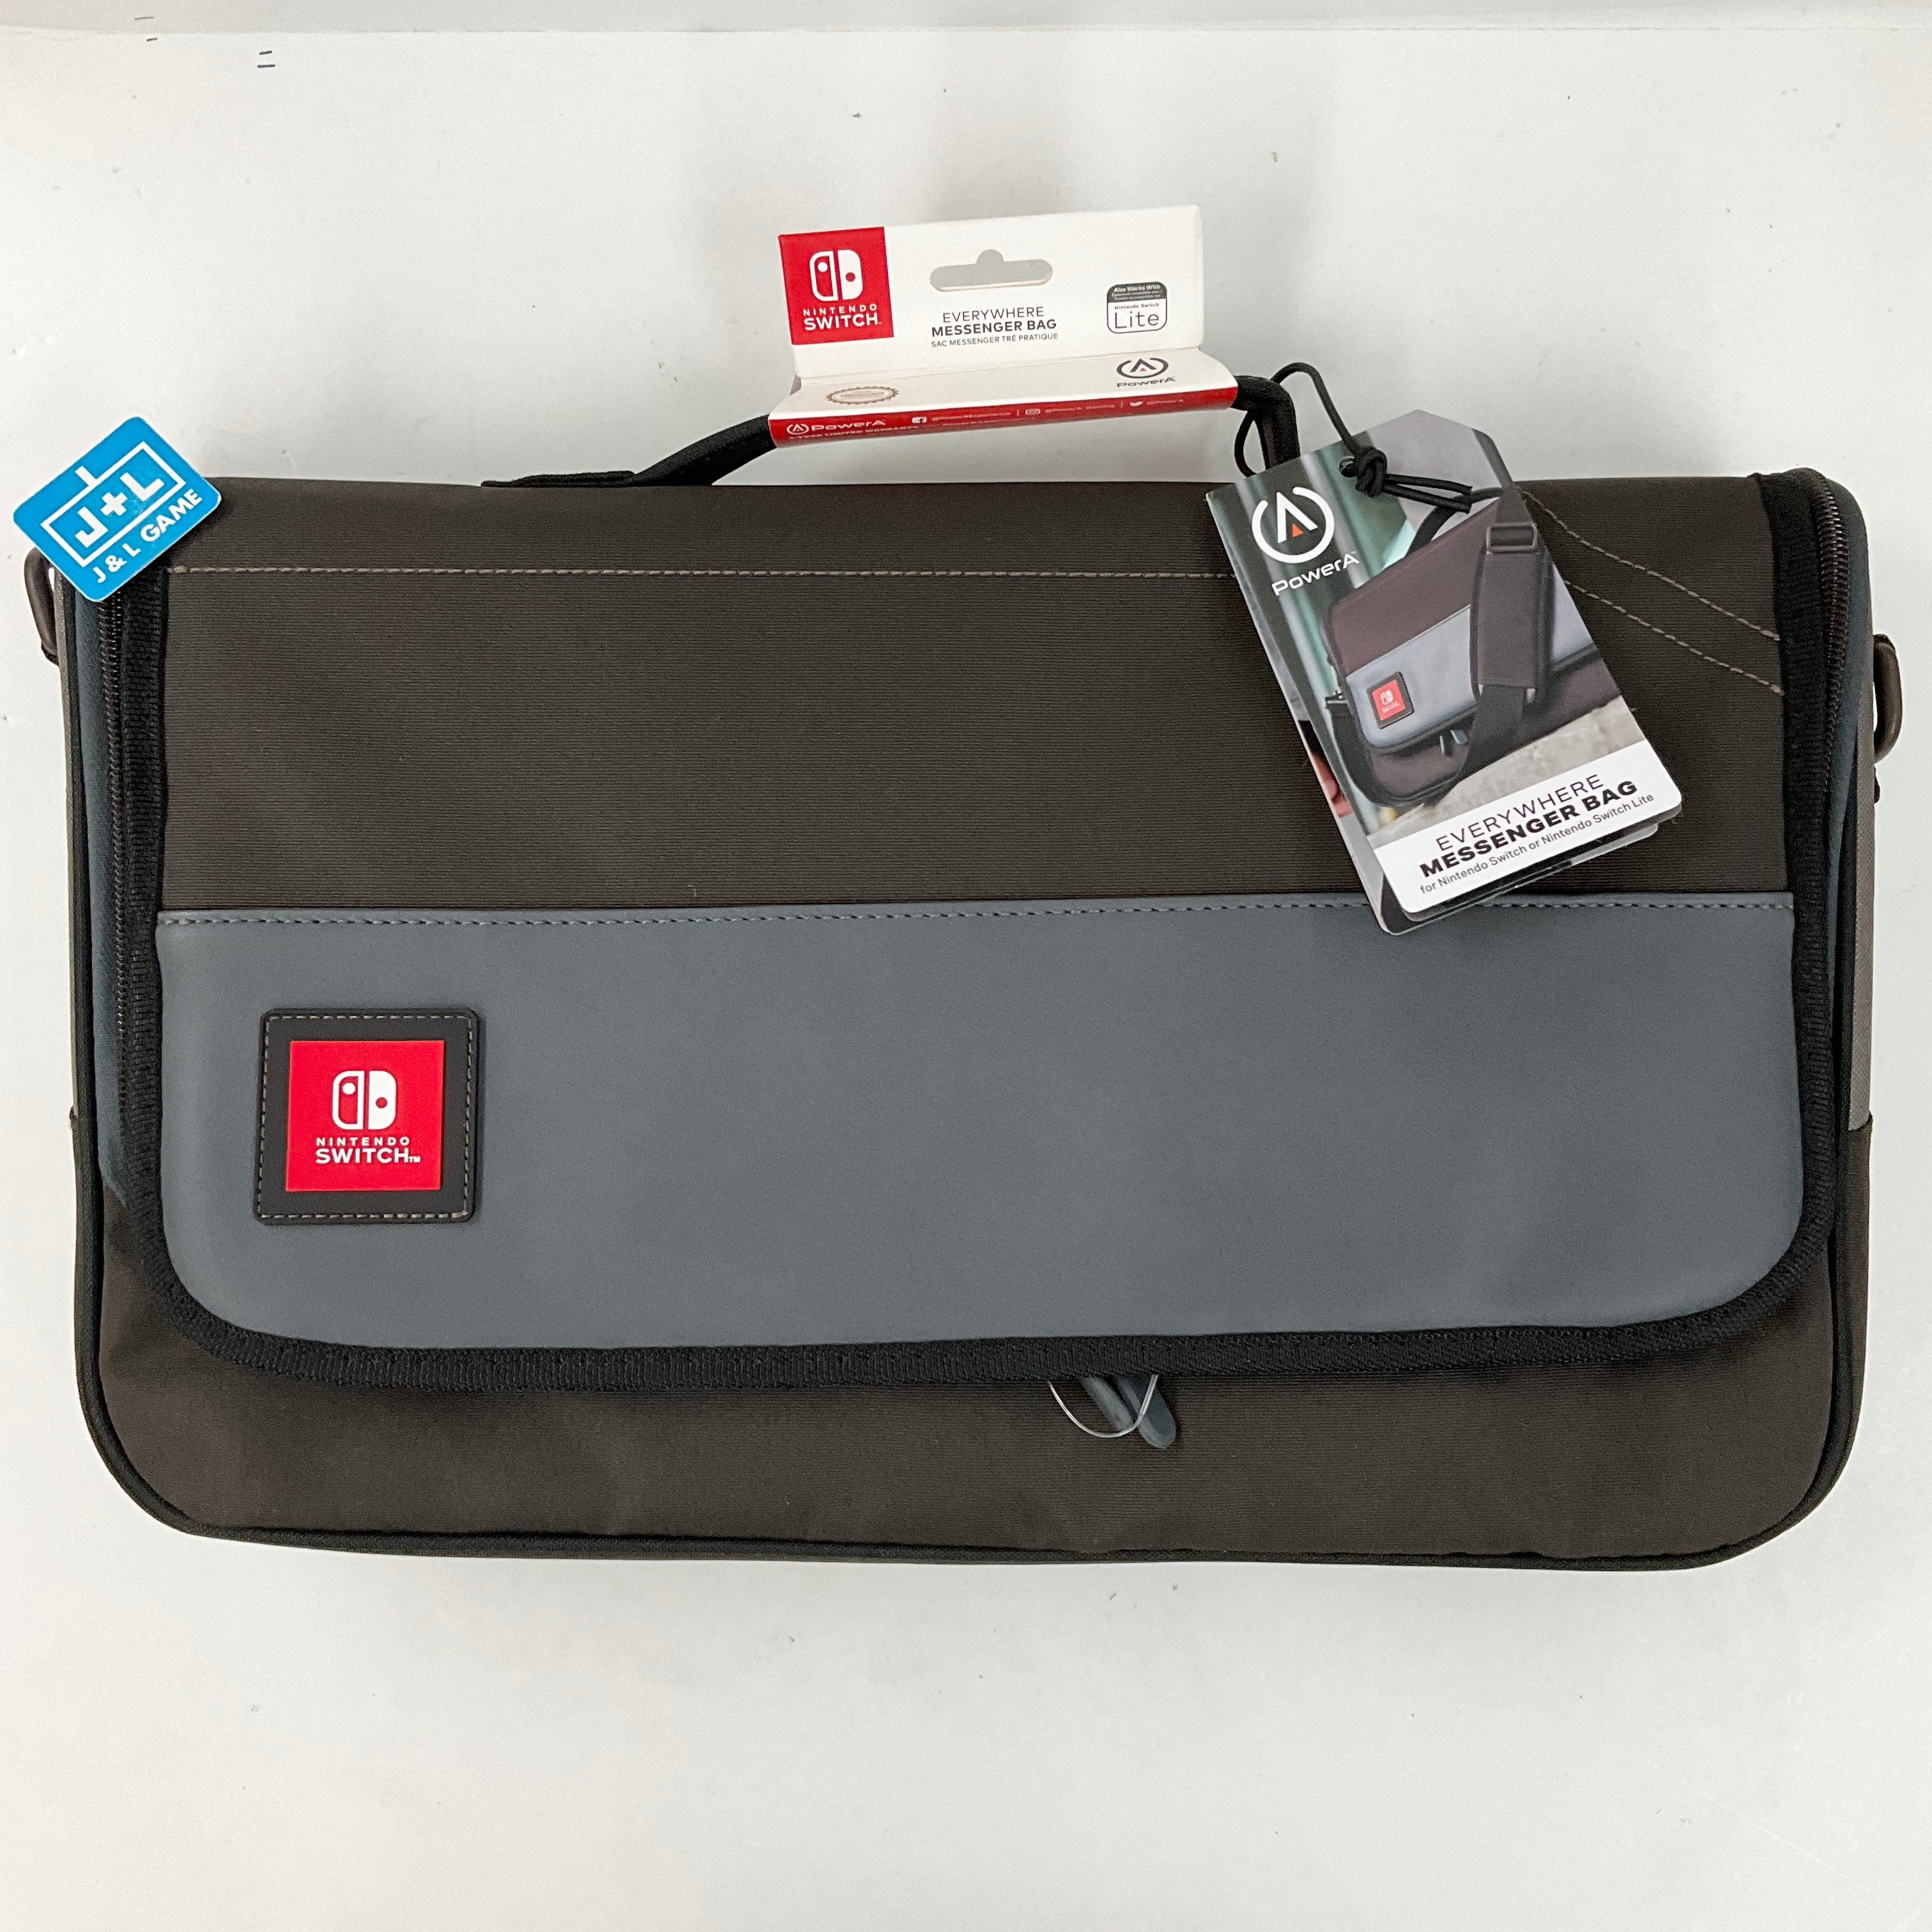 PowerA Everywhere Messenger Bag - (NSW) Nintendo Switch Accessories PowerA   